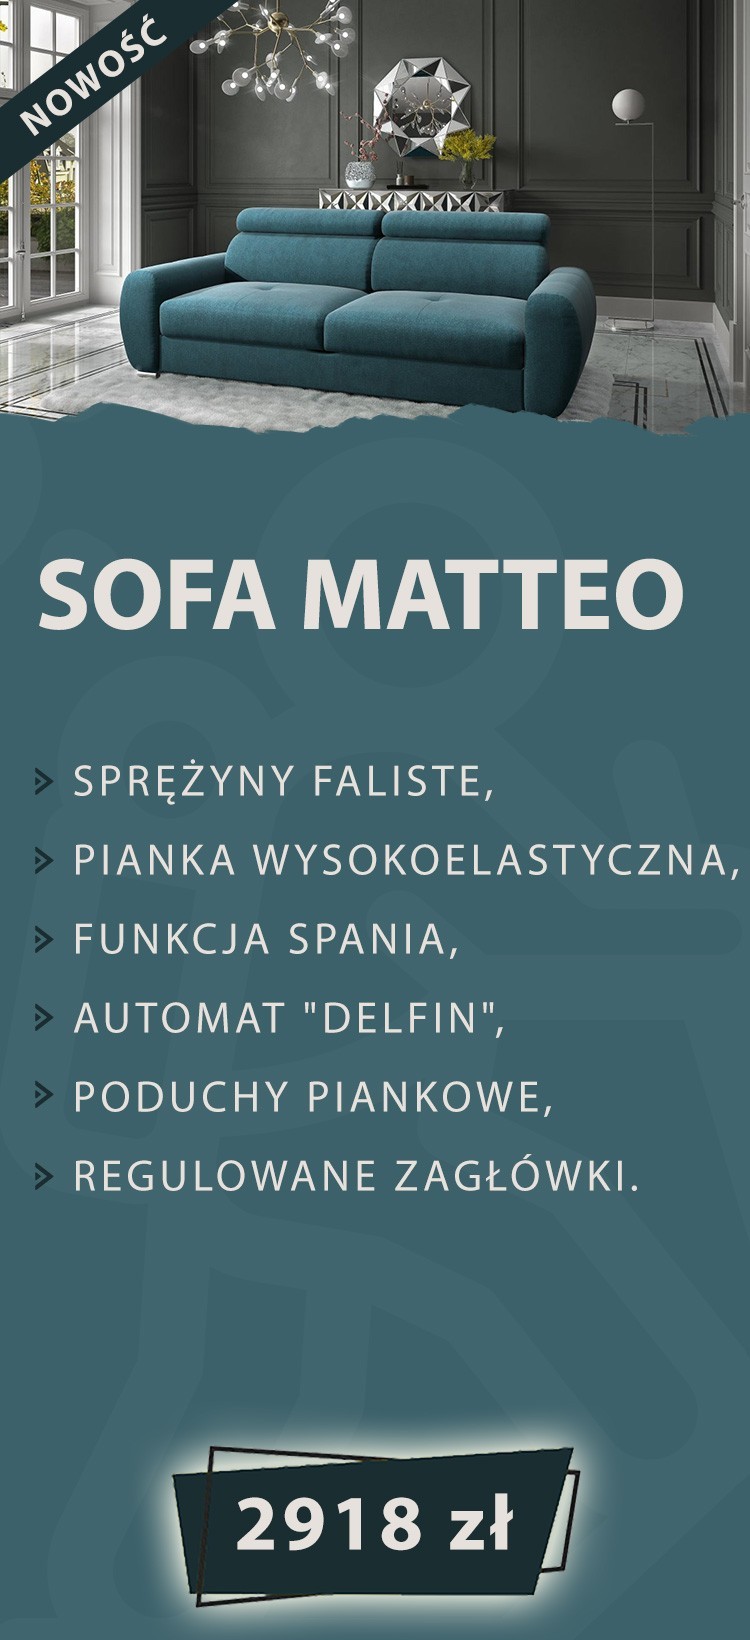 Sofa Matteo